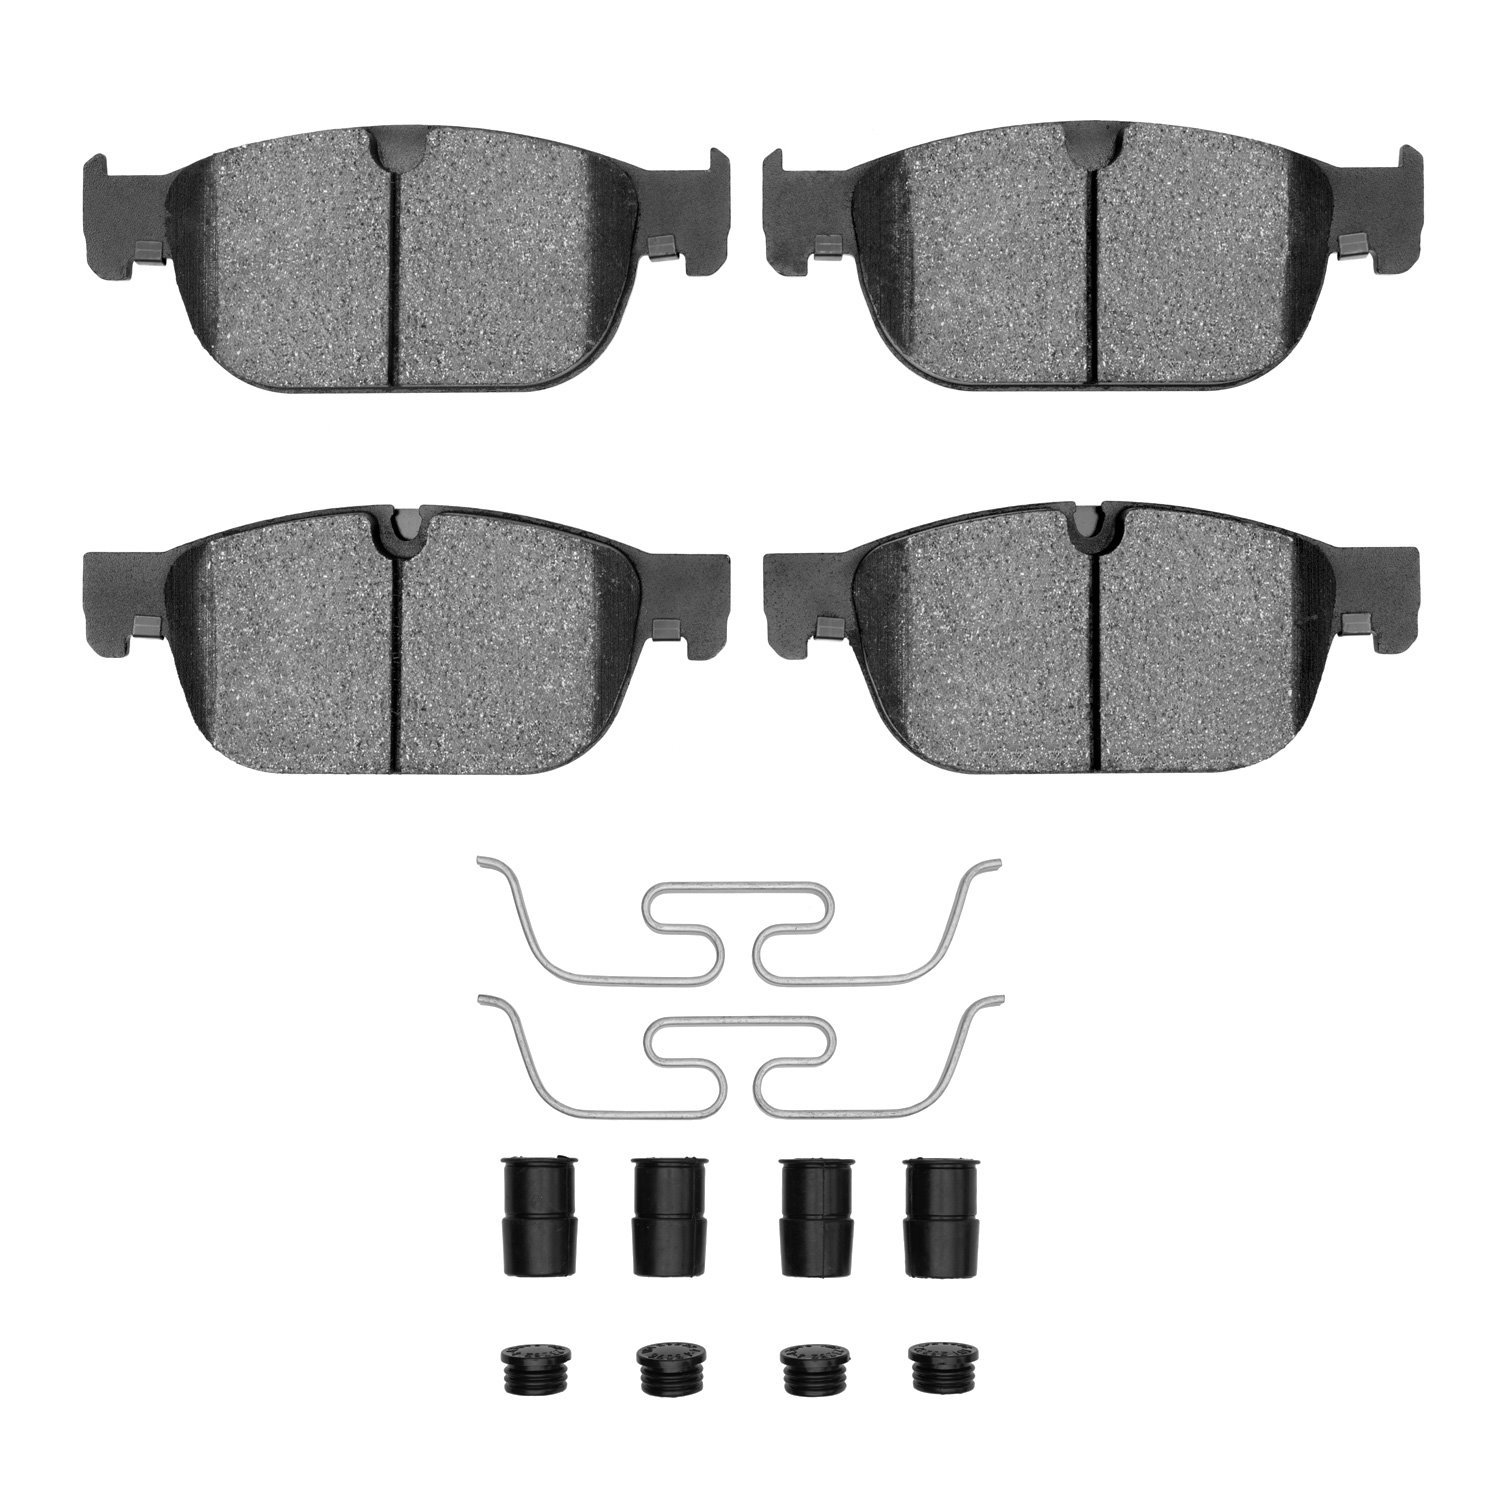 1310-1865-01 3000-Series Ceramic Brake Pads & Hardware Kit, Fits Select Multiple Makes/Models, Position: Front